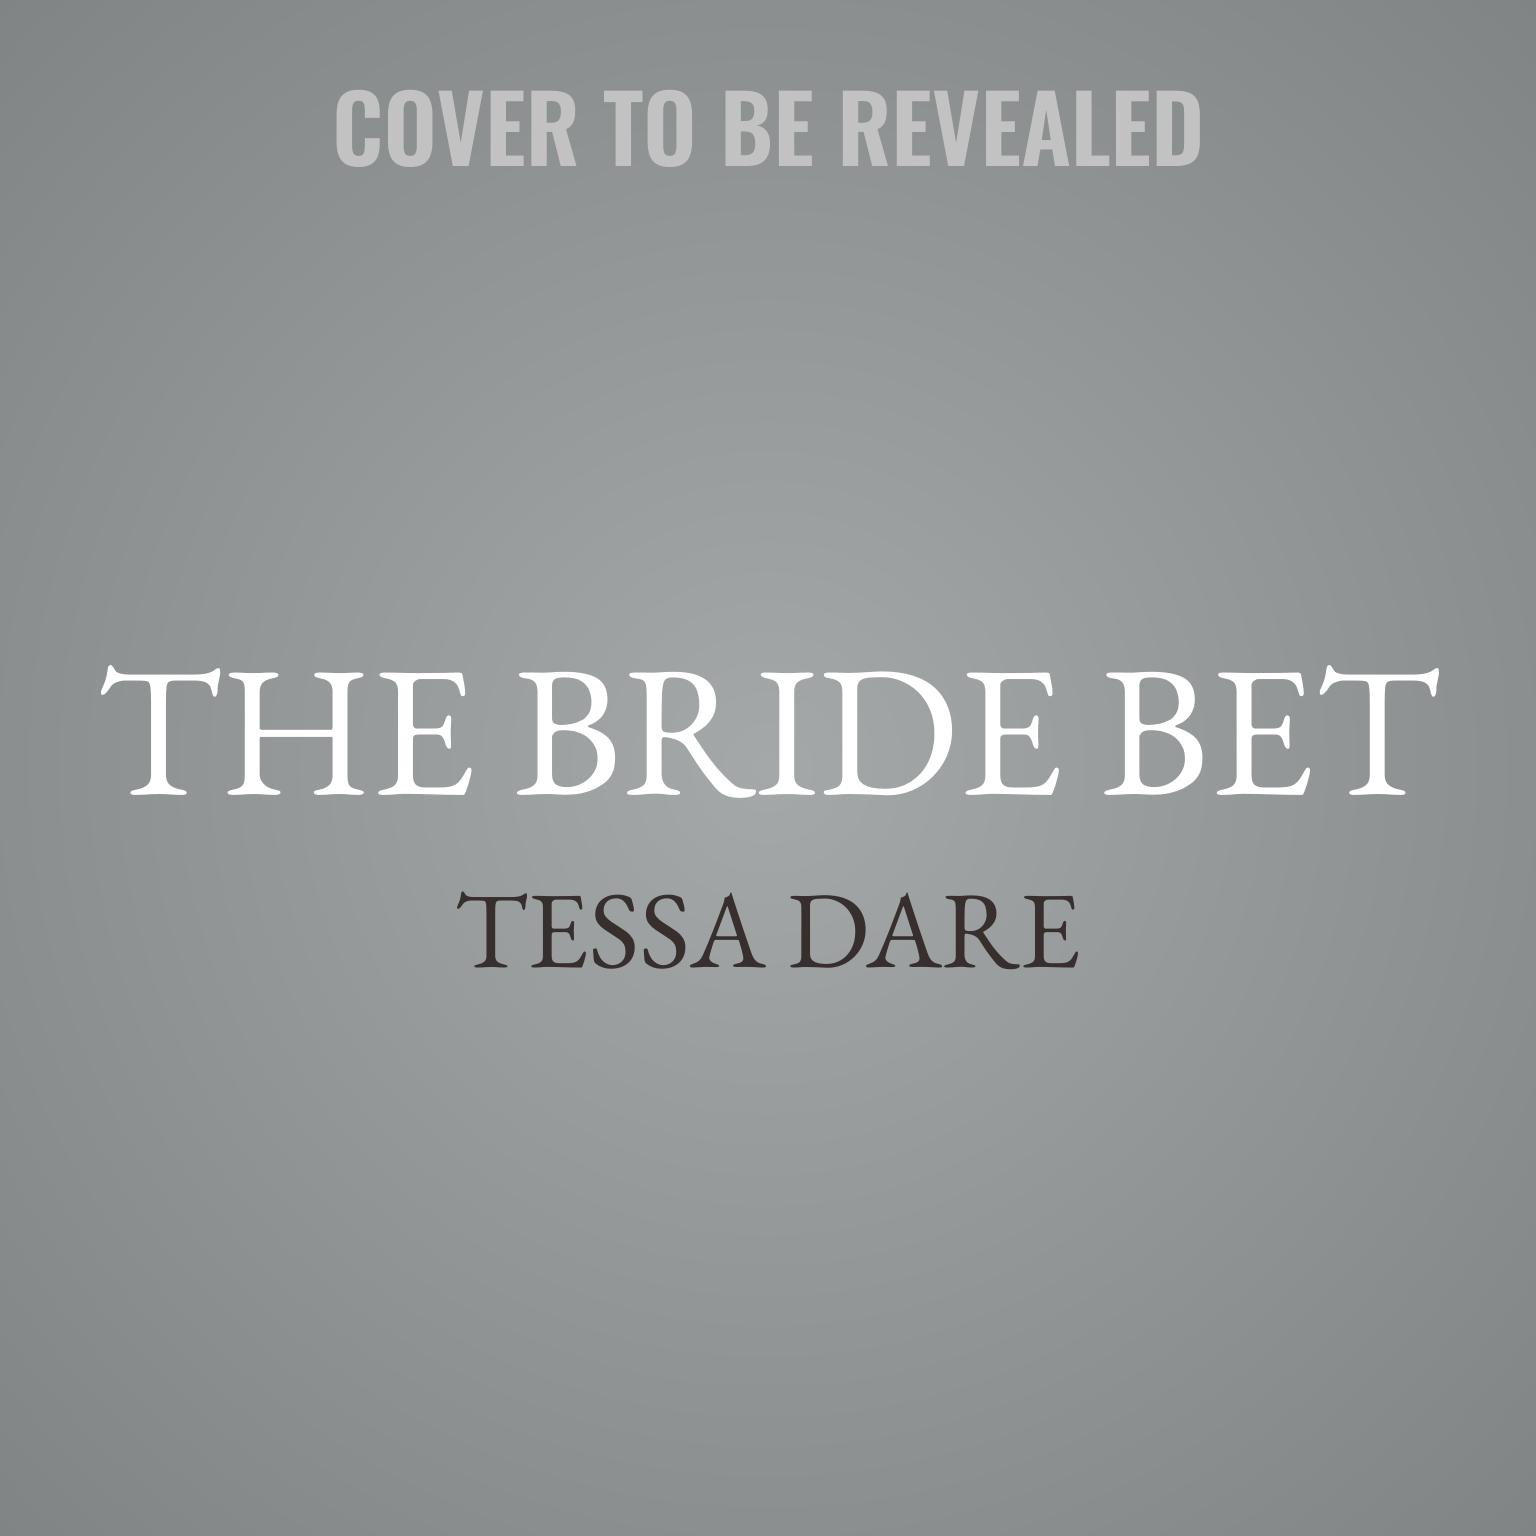 The Bride Bet: Girl Meets Duke Audiobook, by Tessa Dare